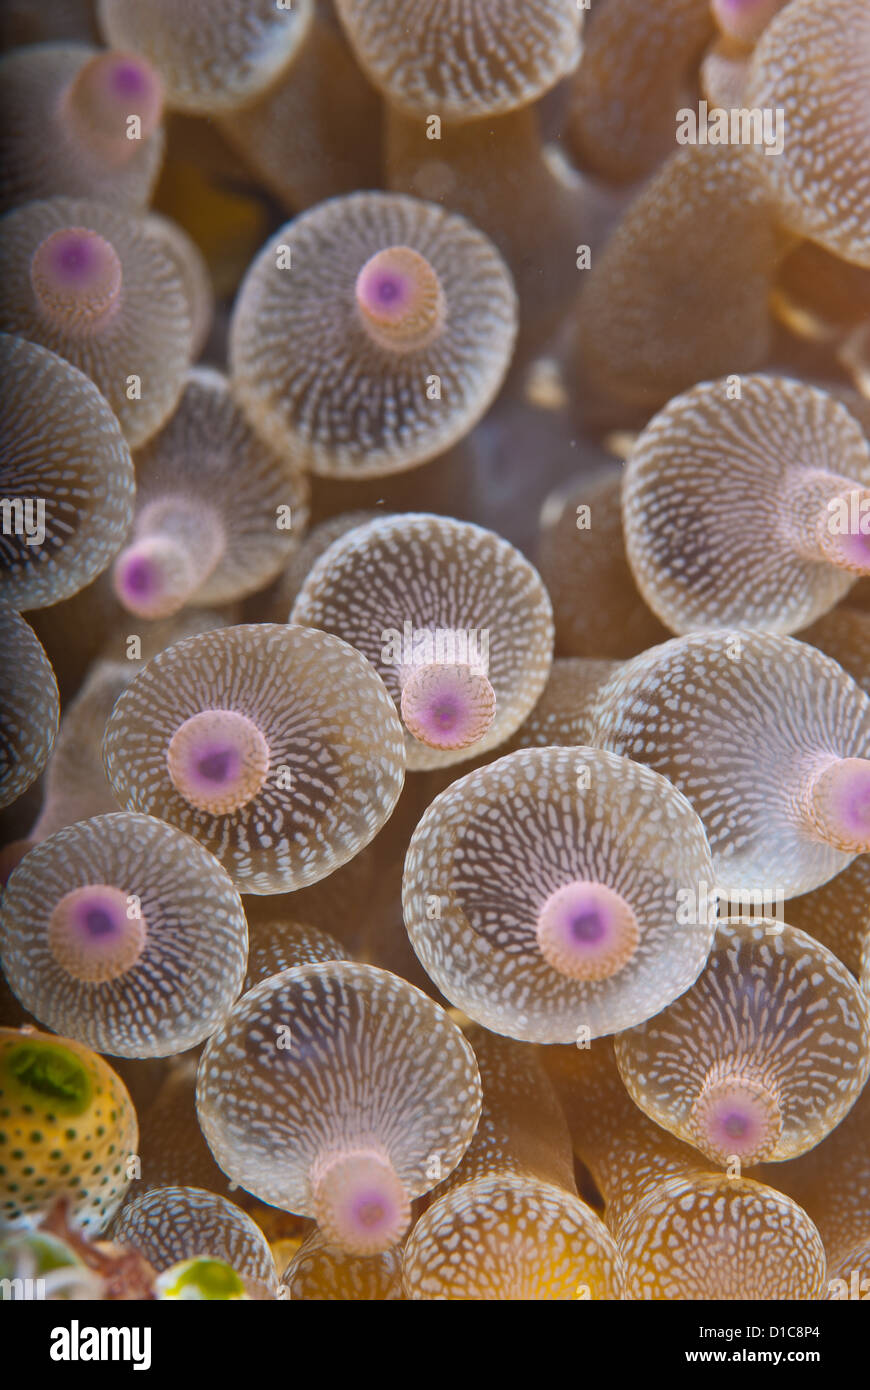 pink anemone tentacles looking like titties and nipples. Komodo Indonesia  Stock Photo - Alamy